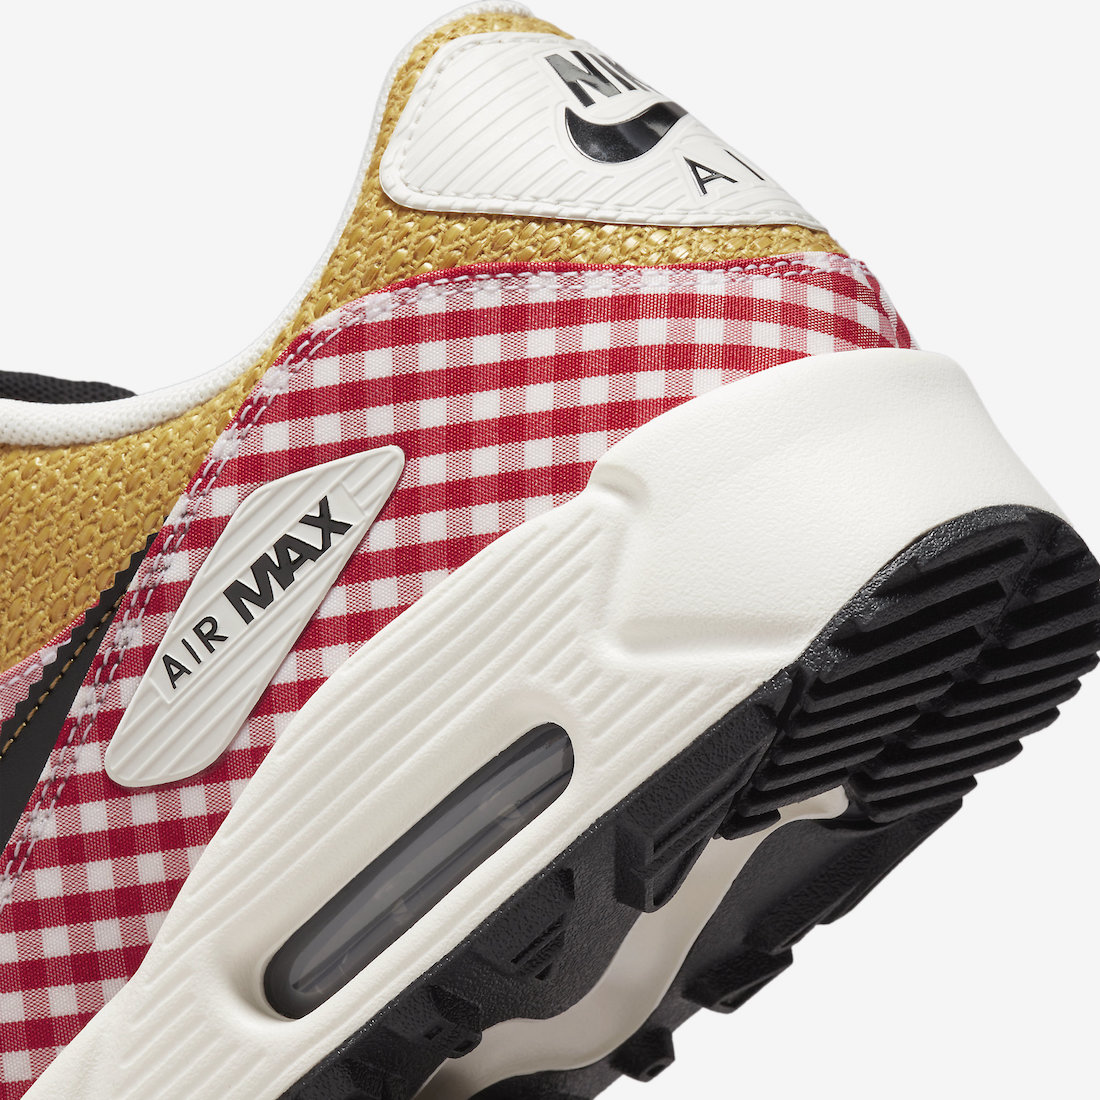 Nike Air Max 90 Golf Picnic DH5244-600 Release Date